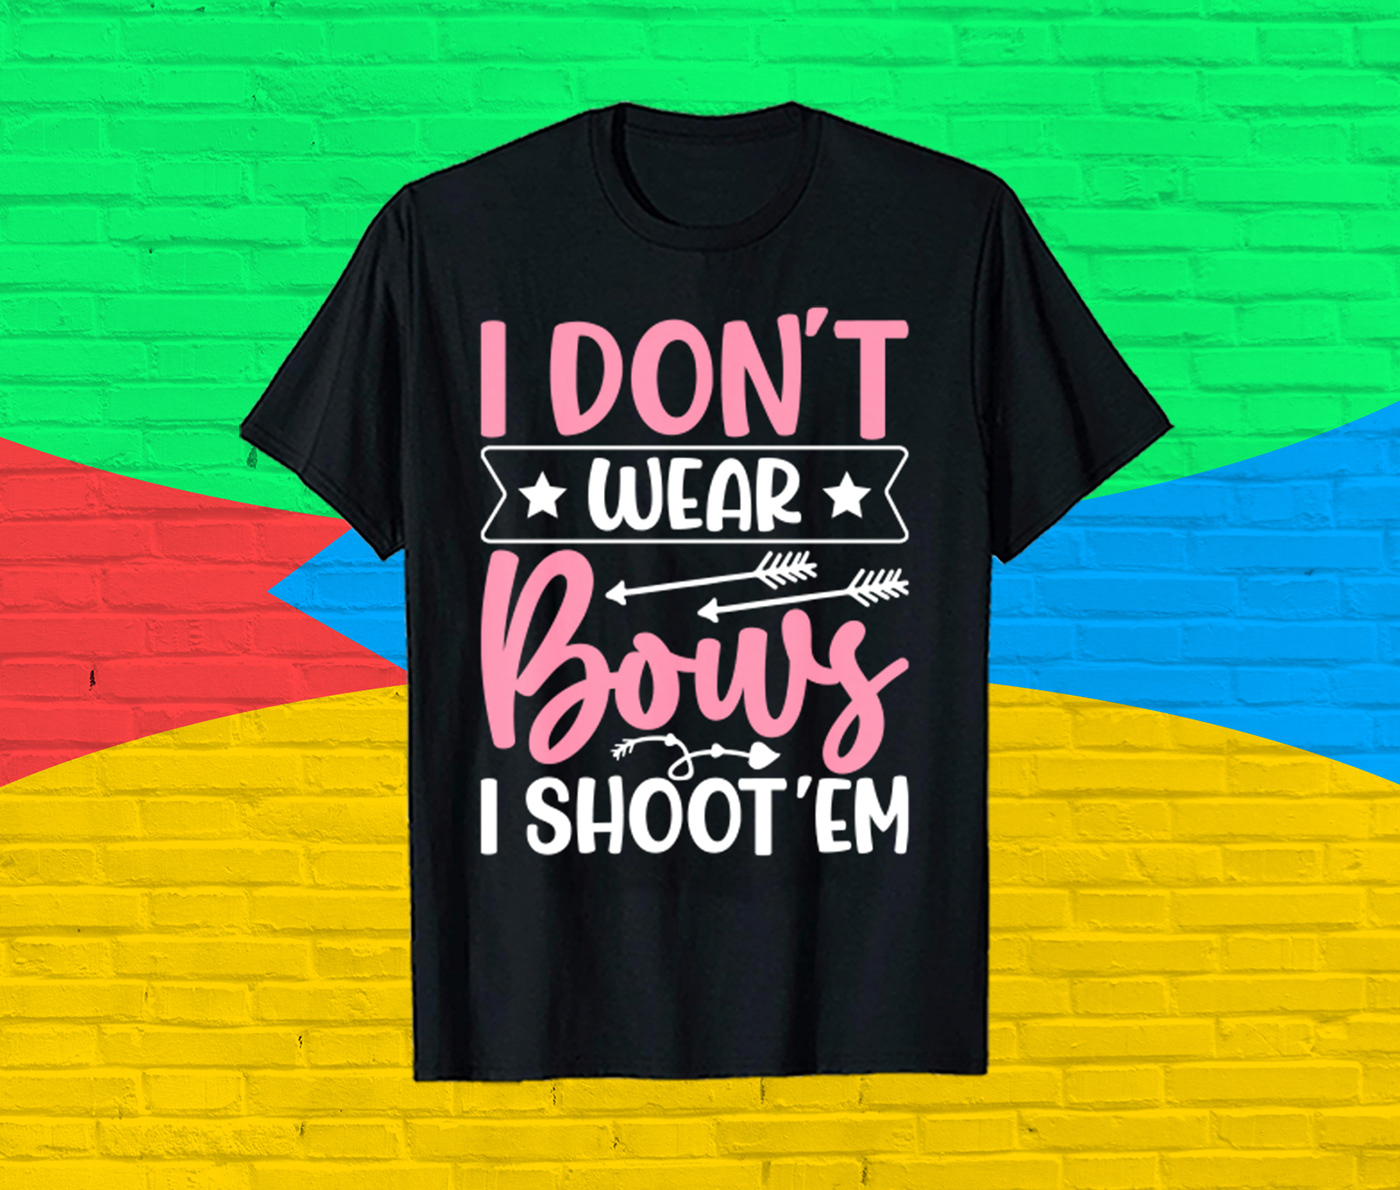 Archery typography design t-shirt typography   shirt archery designs archery girl Archery Girl T-shirt Archery T-shirts  T shirt designs